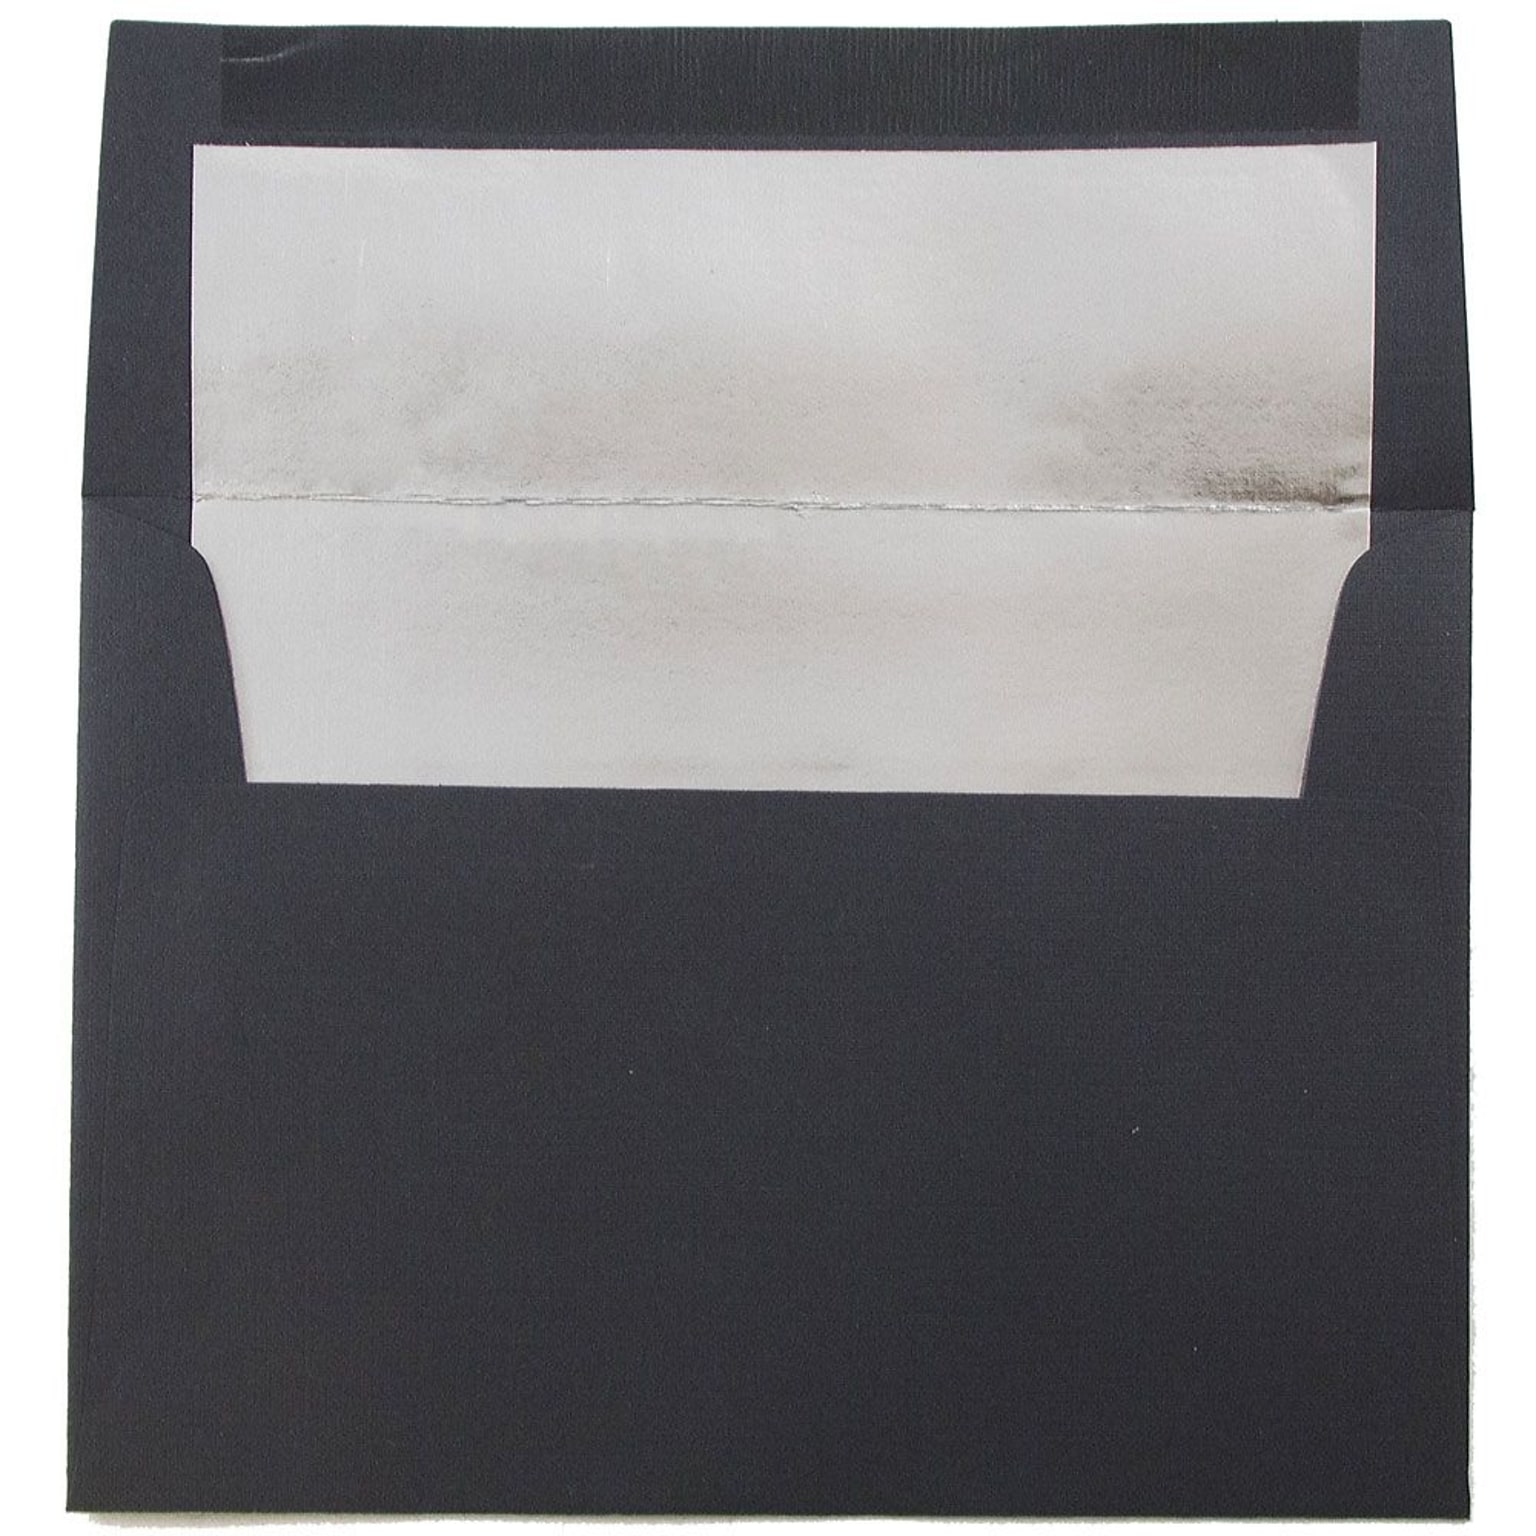 JAM Paper A6 Foil Lined Invitation Envelopes, 4.75 x 6.5, Black Linen with Silver Foil, 25/Pack (3243681)